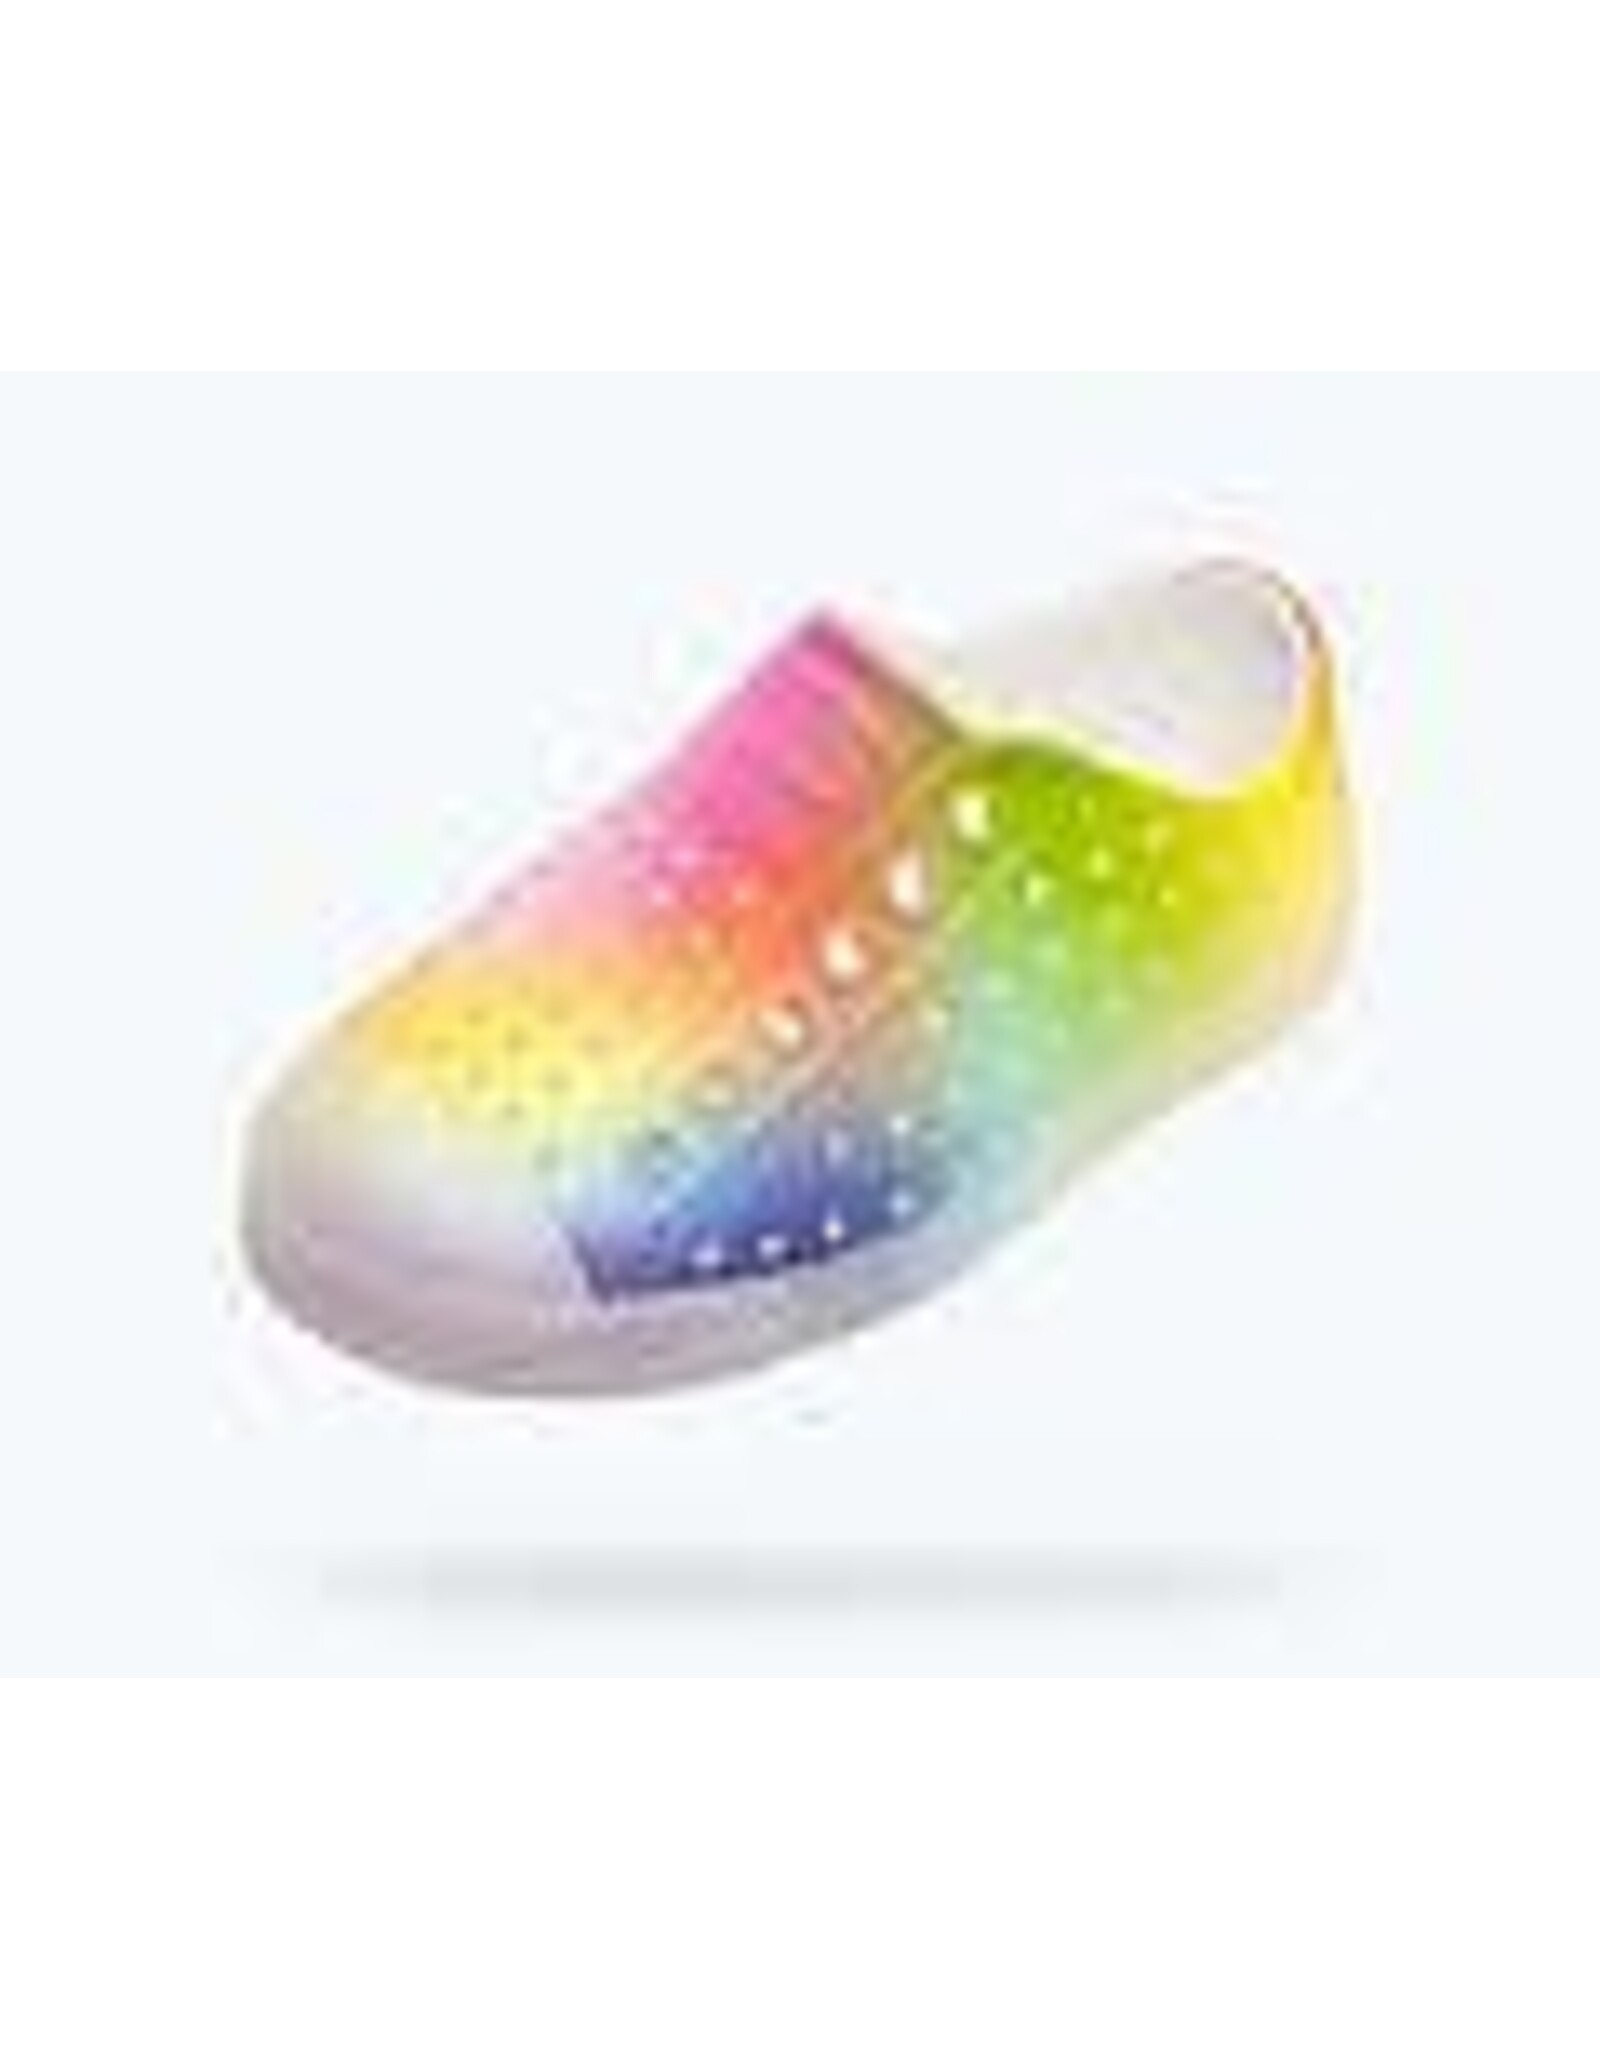 Native Shoes Shell White/Translucent/Rainbow/Blur